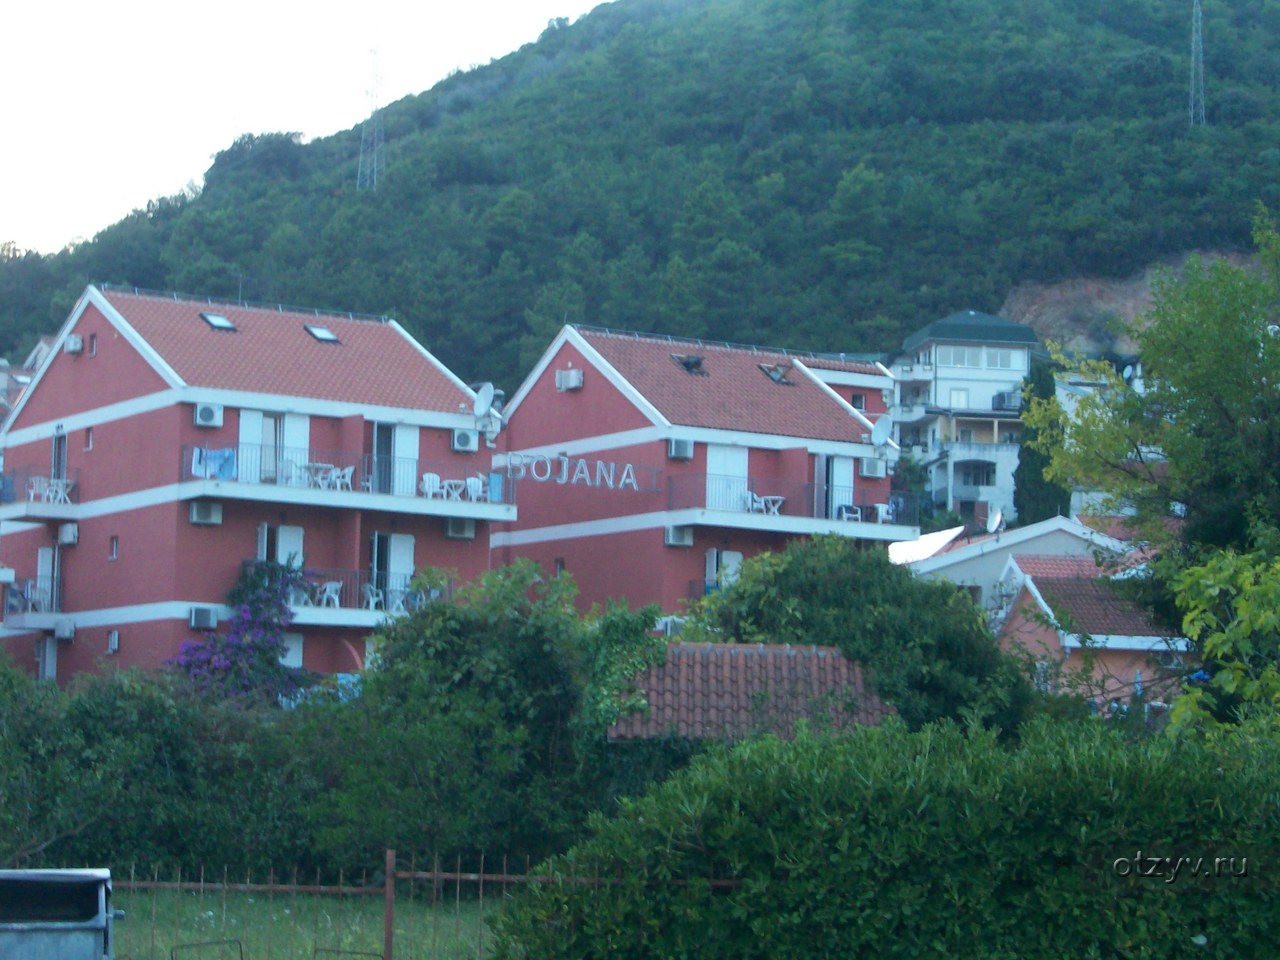 Villa Bojana